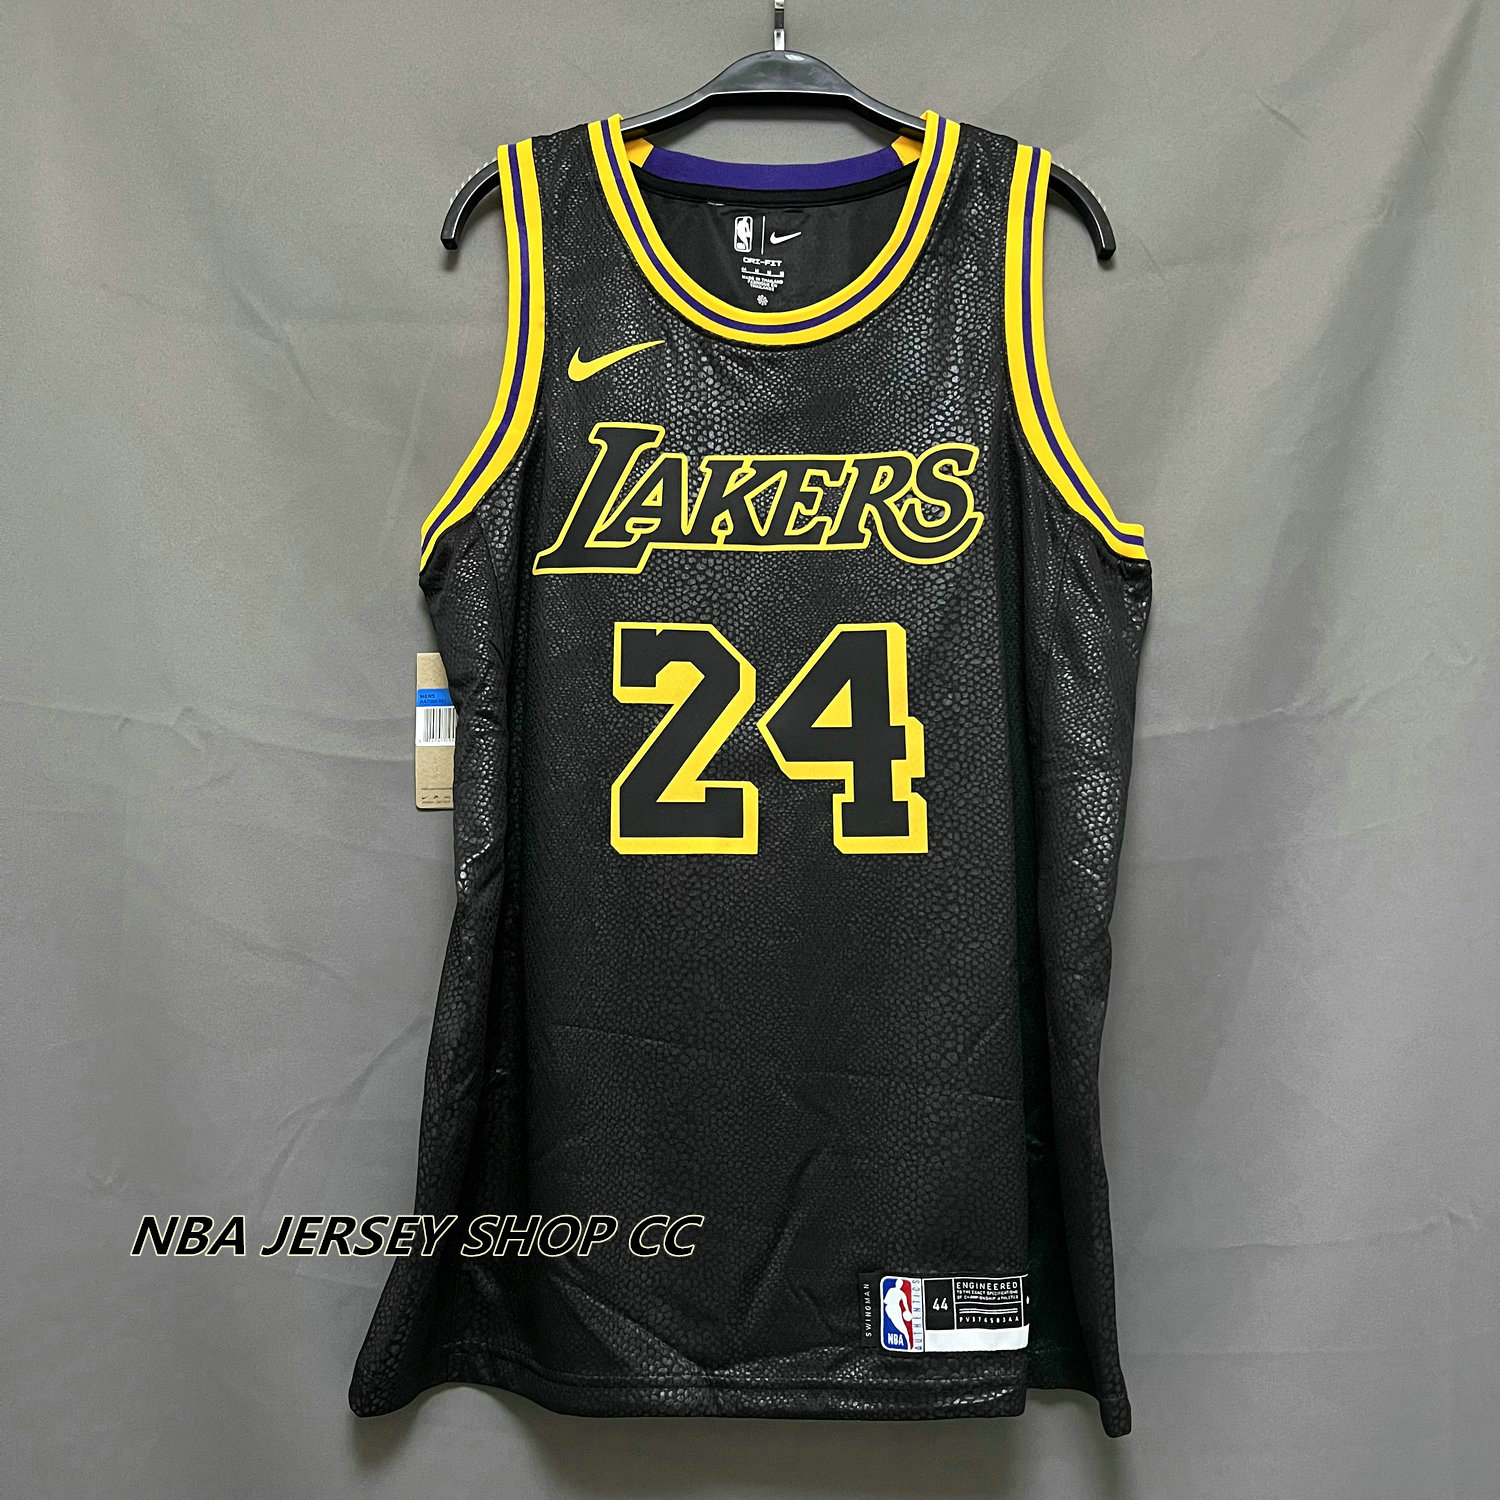 Haoshangzh55 L.A. Lakers# 8 24 Kobe Bryant Men's Basketball Jersey